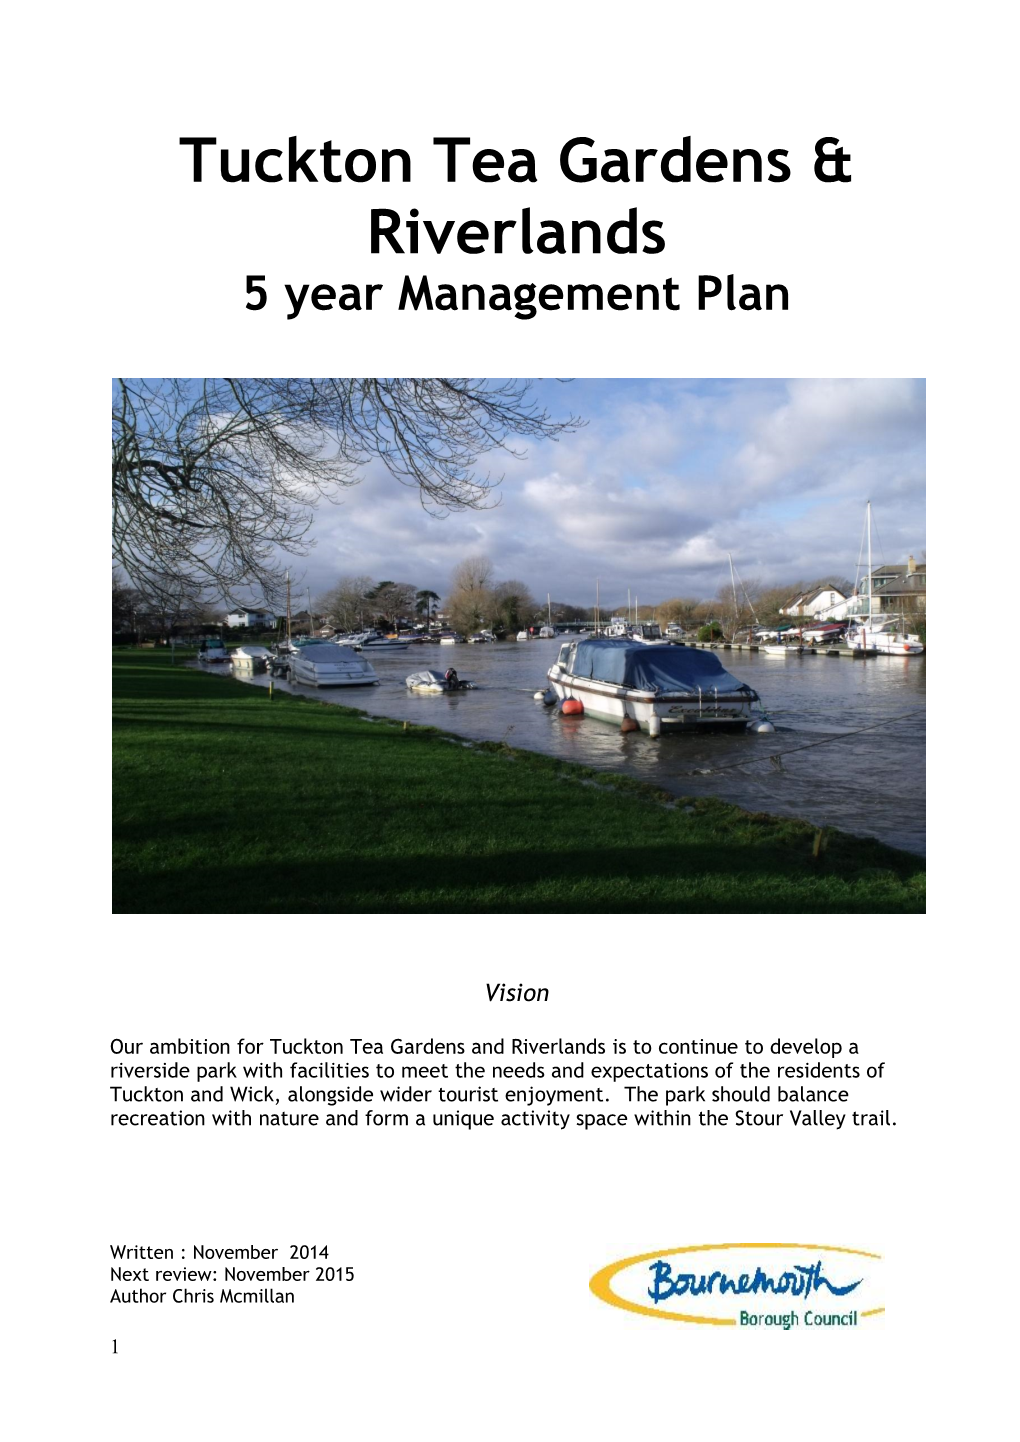 Tuckton Tea Gardens & Riverlands Management Plan 2014